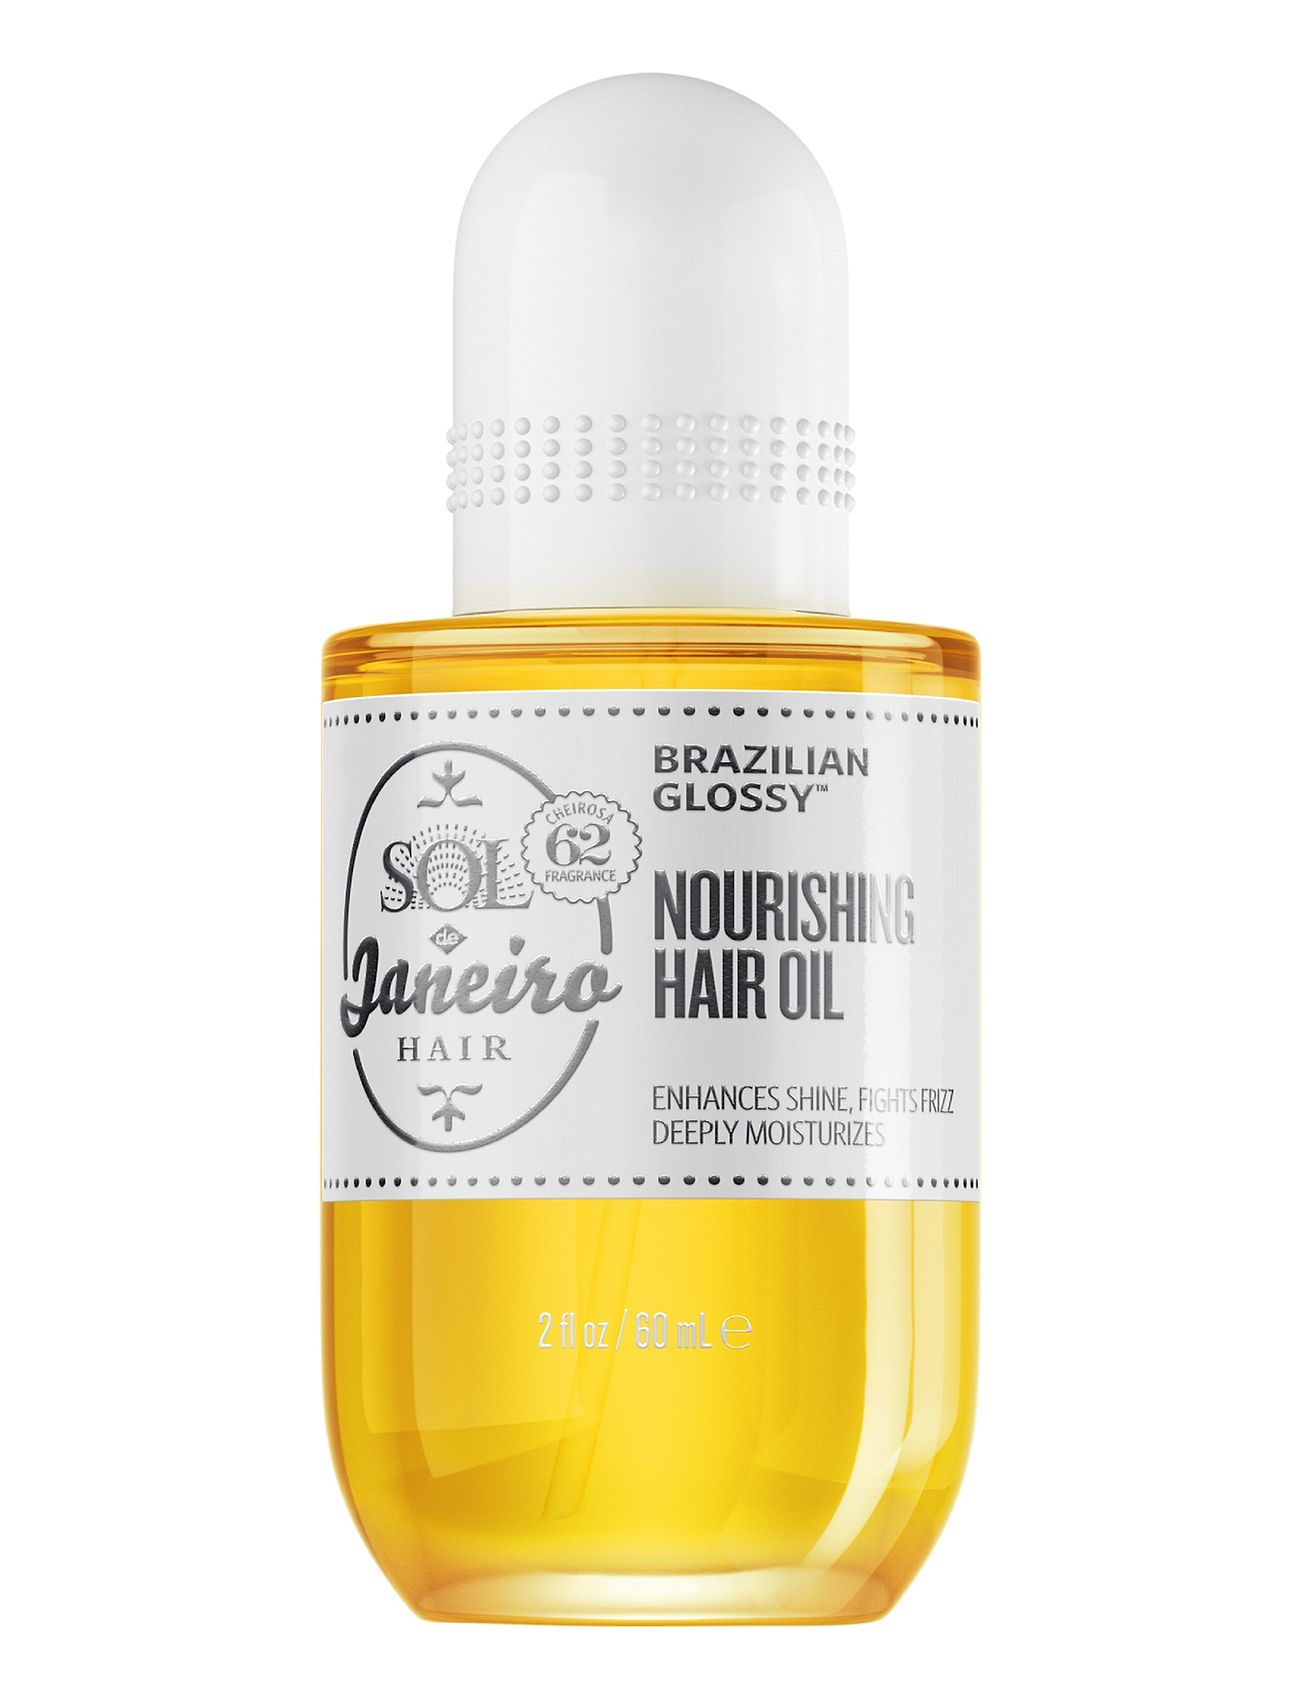 ambition Sindsro rutine Sol de Janeiro Brazilian Glossy Nourishing Hair Oil 80ml - Hårolie |  Boozt.com